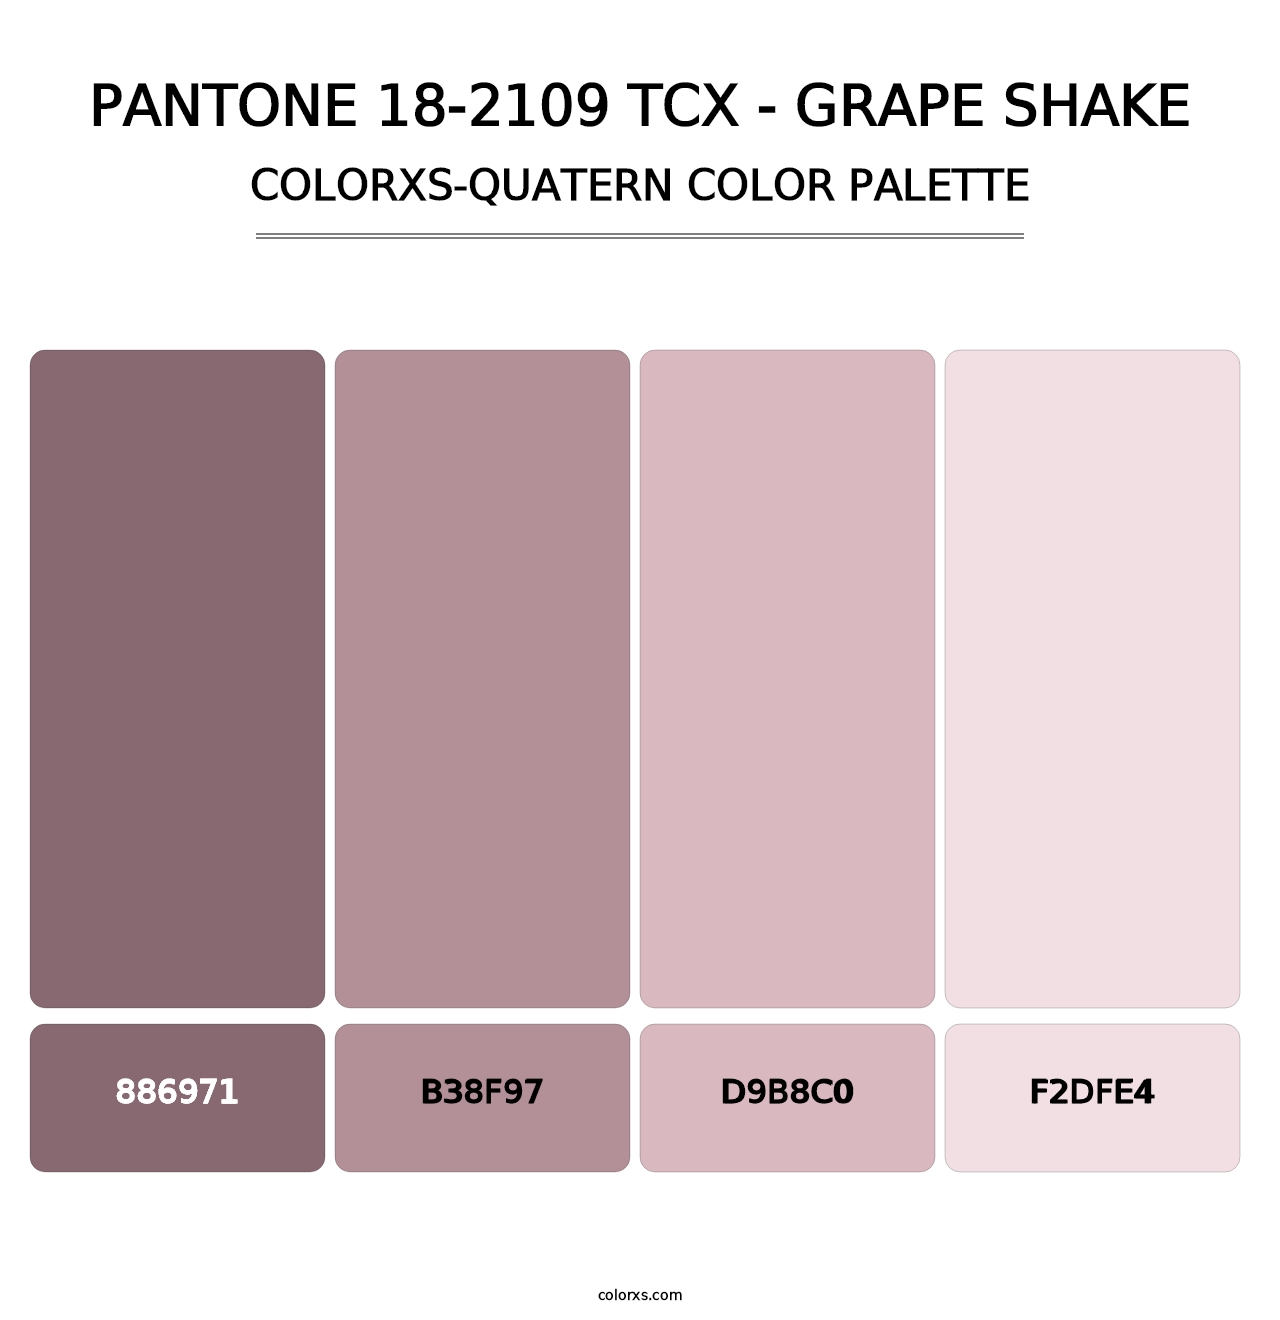 PANTONE 18-2109 TCX - Grape Shake - Colorxs Quatern Palette